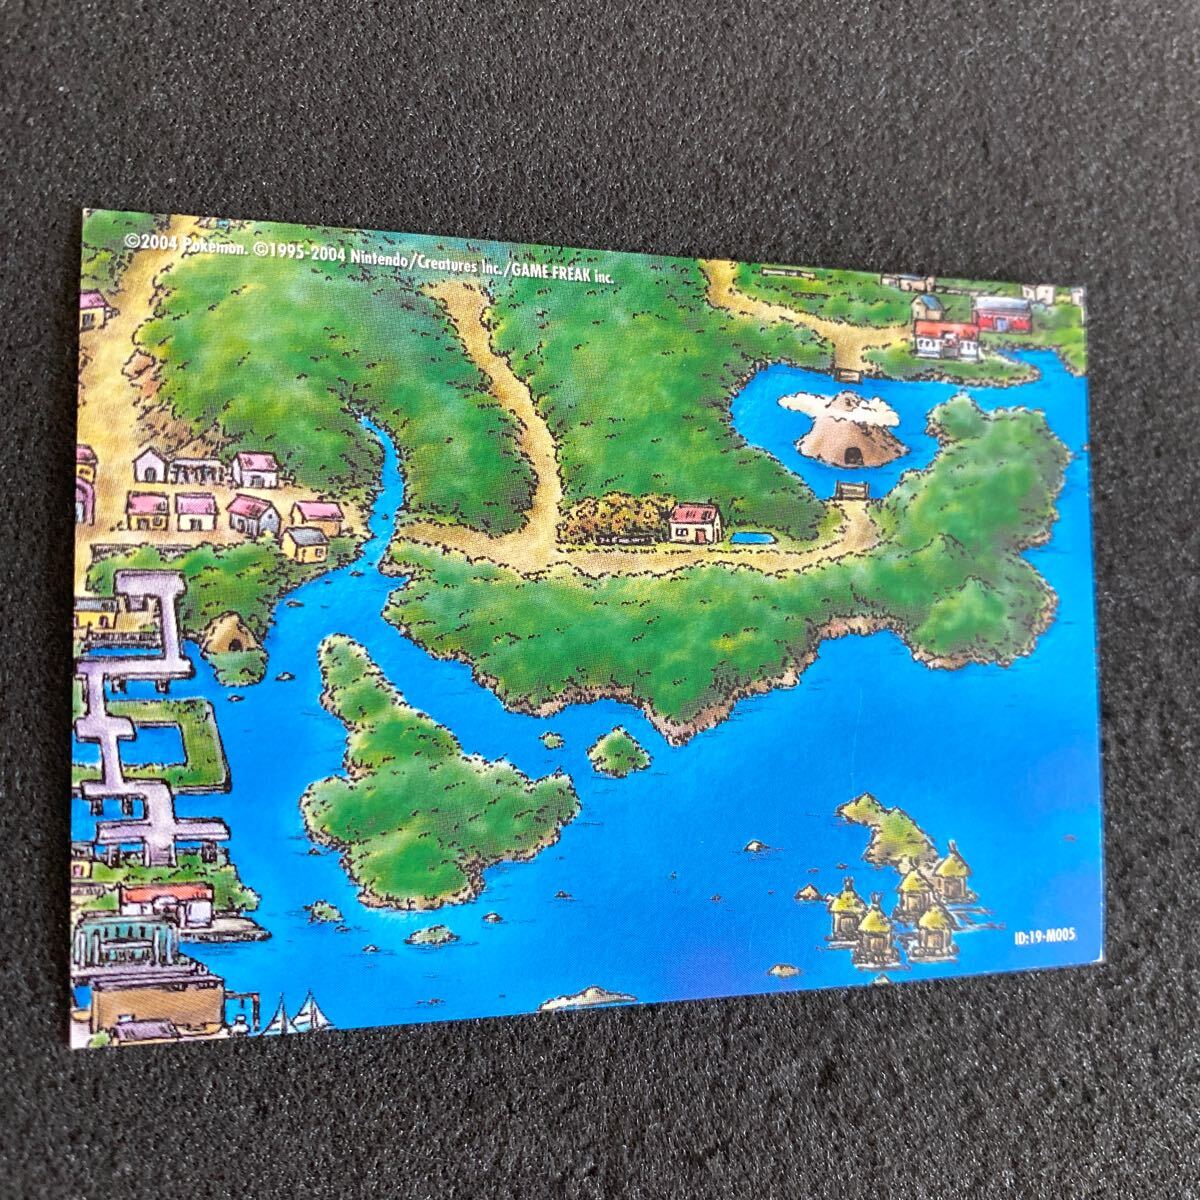  Pokemon Battle Card e + emerald map card M005 nintendo game GBA Pocket Monster anime Carddas average on goods 